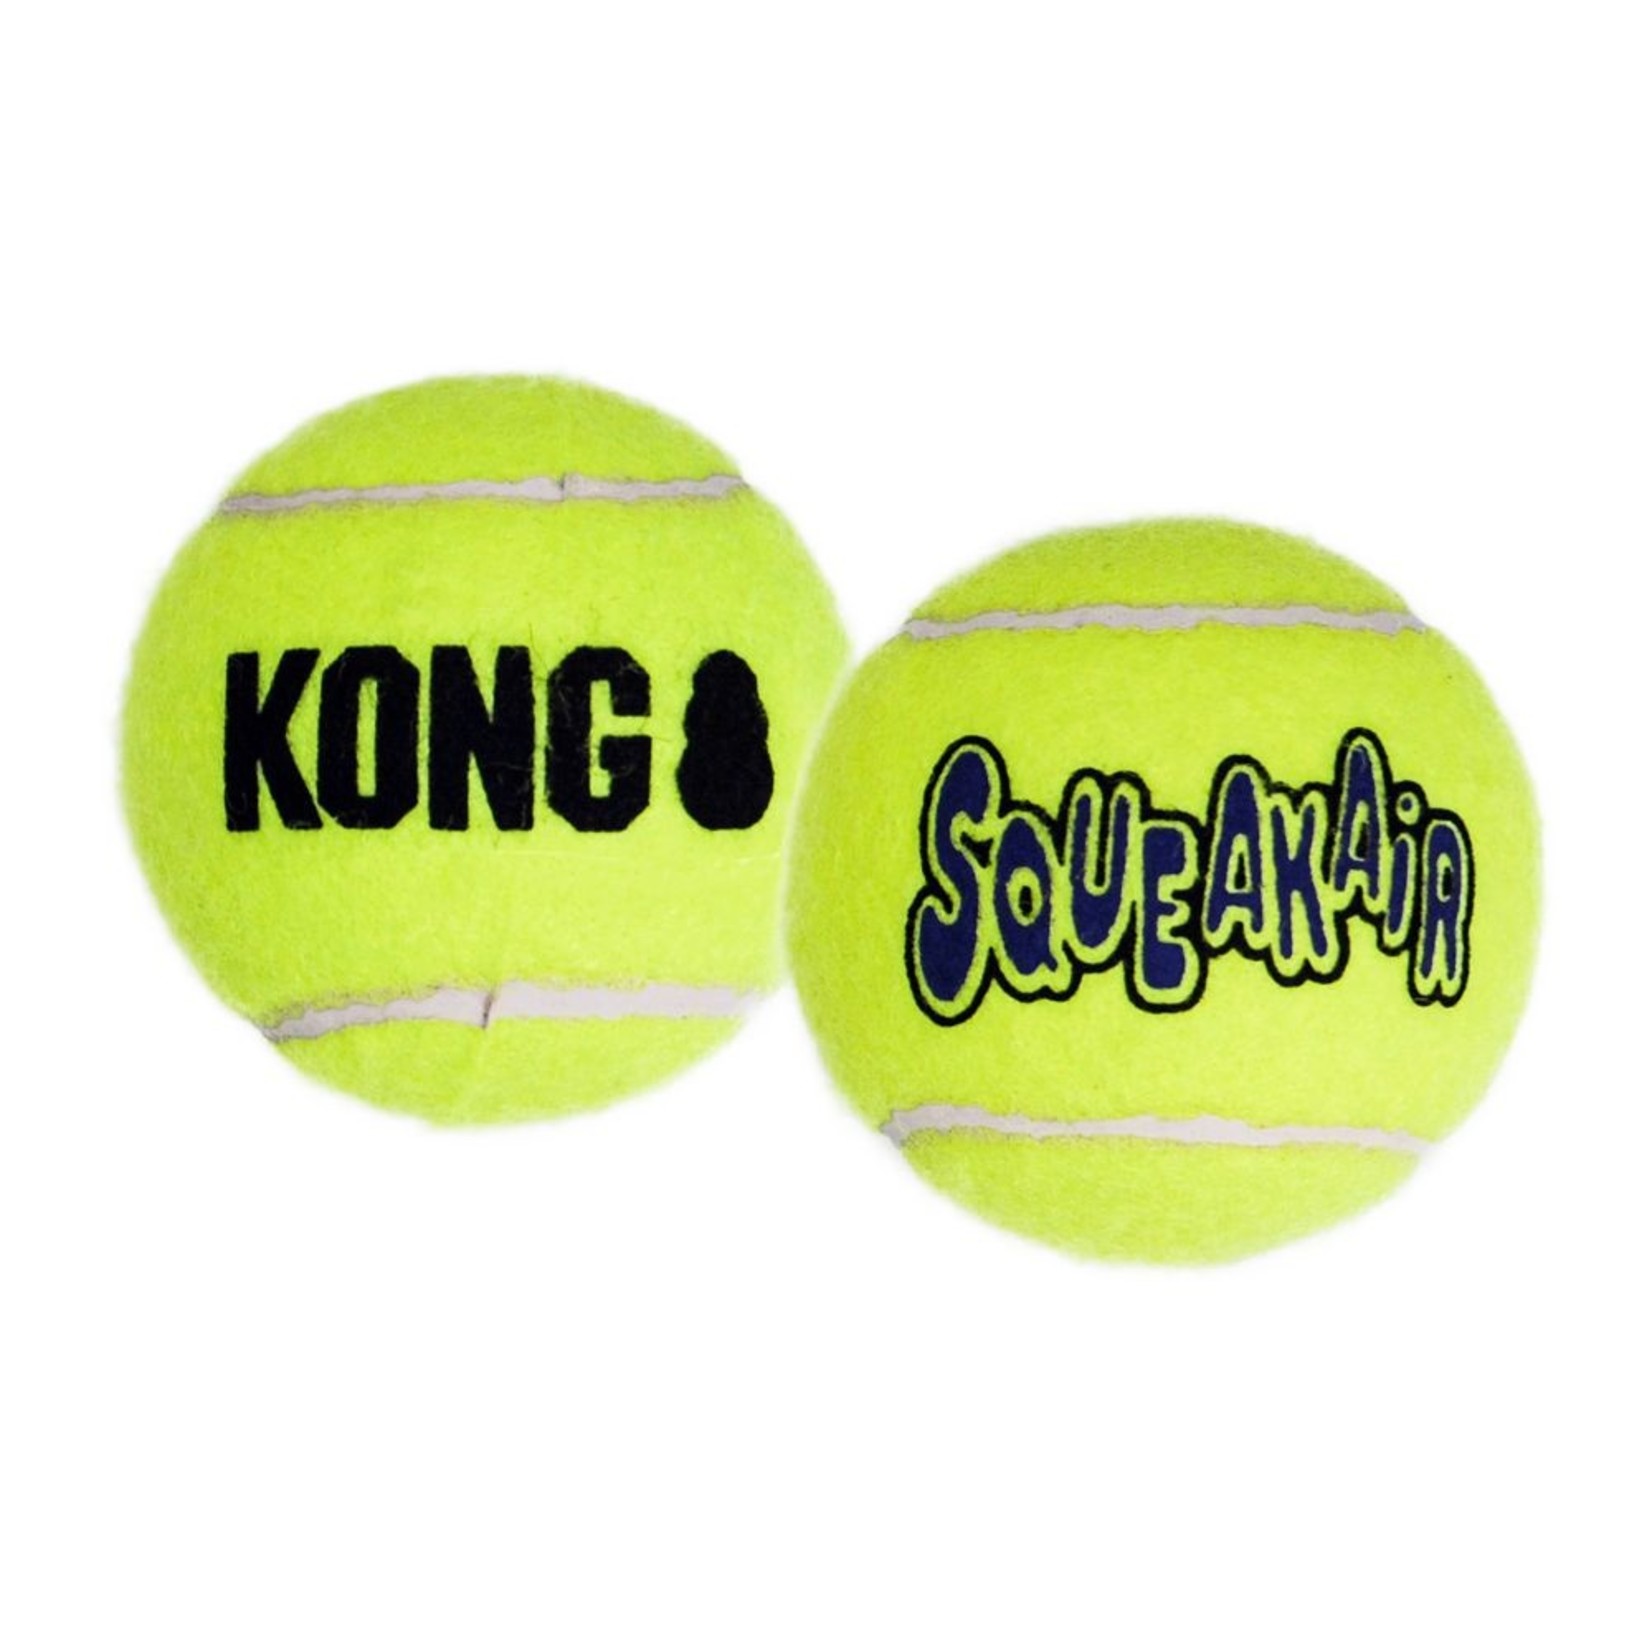 Kong Kong Air SqueakAir Squeaking Tennis Ball Medium